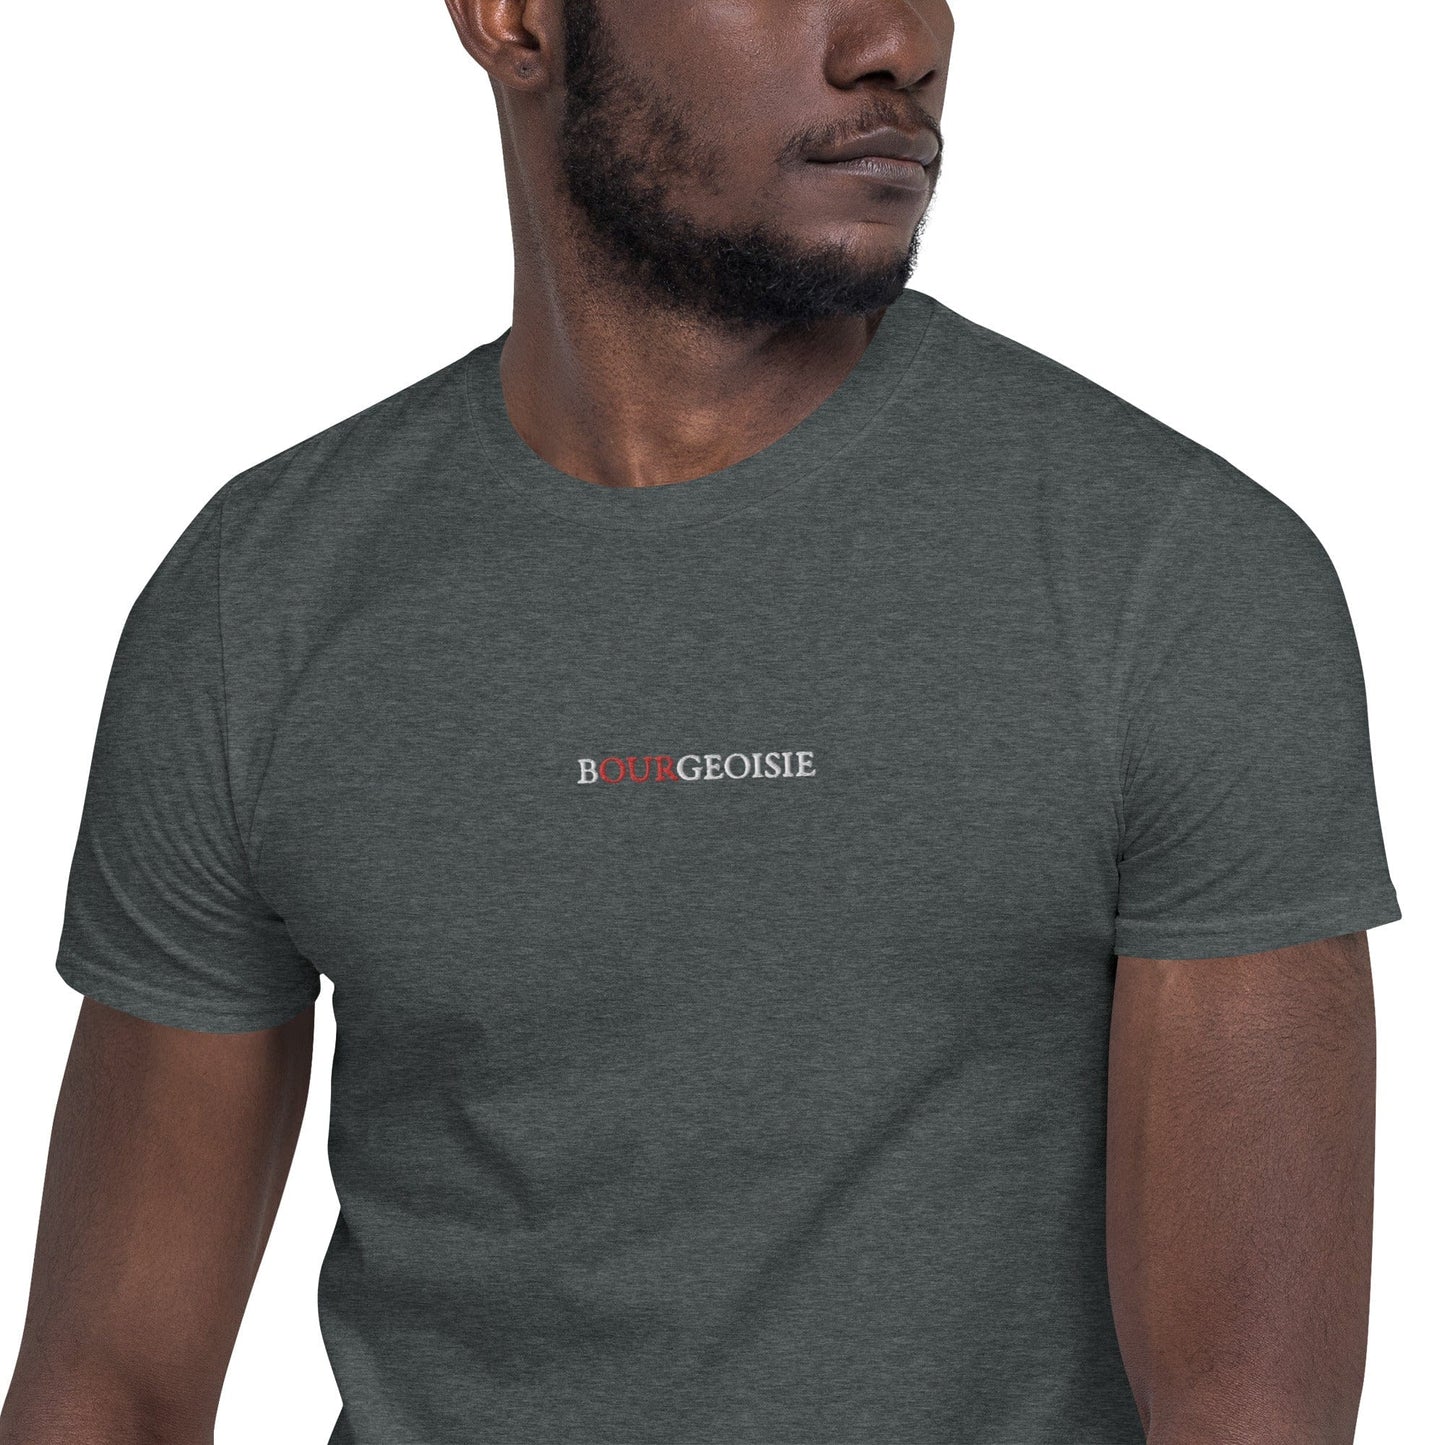 Bourgeoisie - Embroidered - Premium T-Shirt